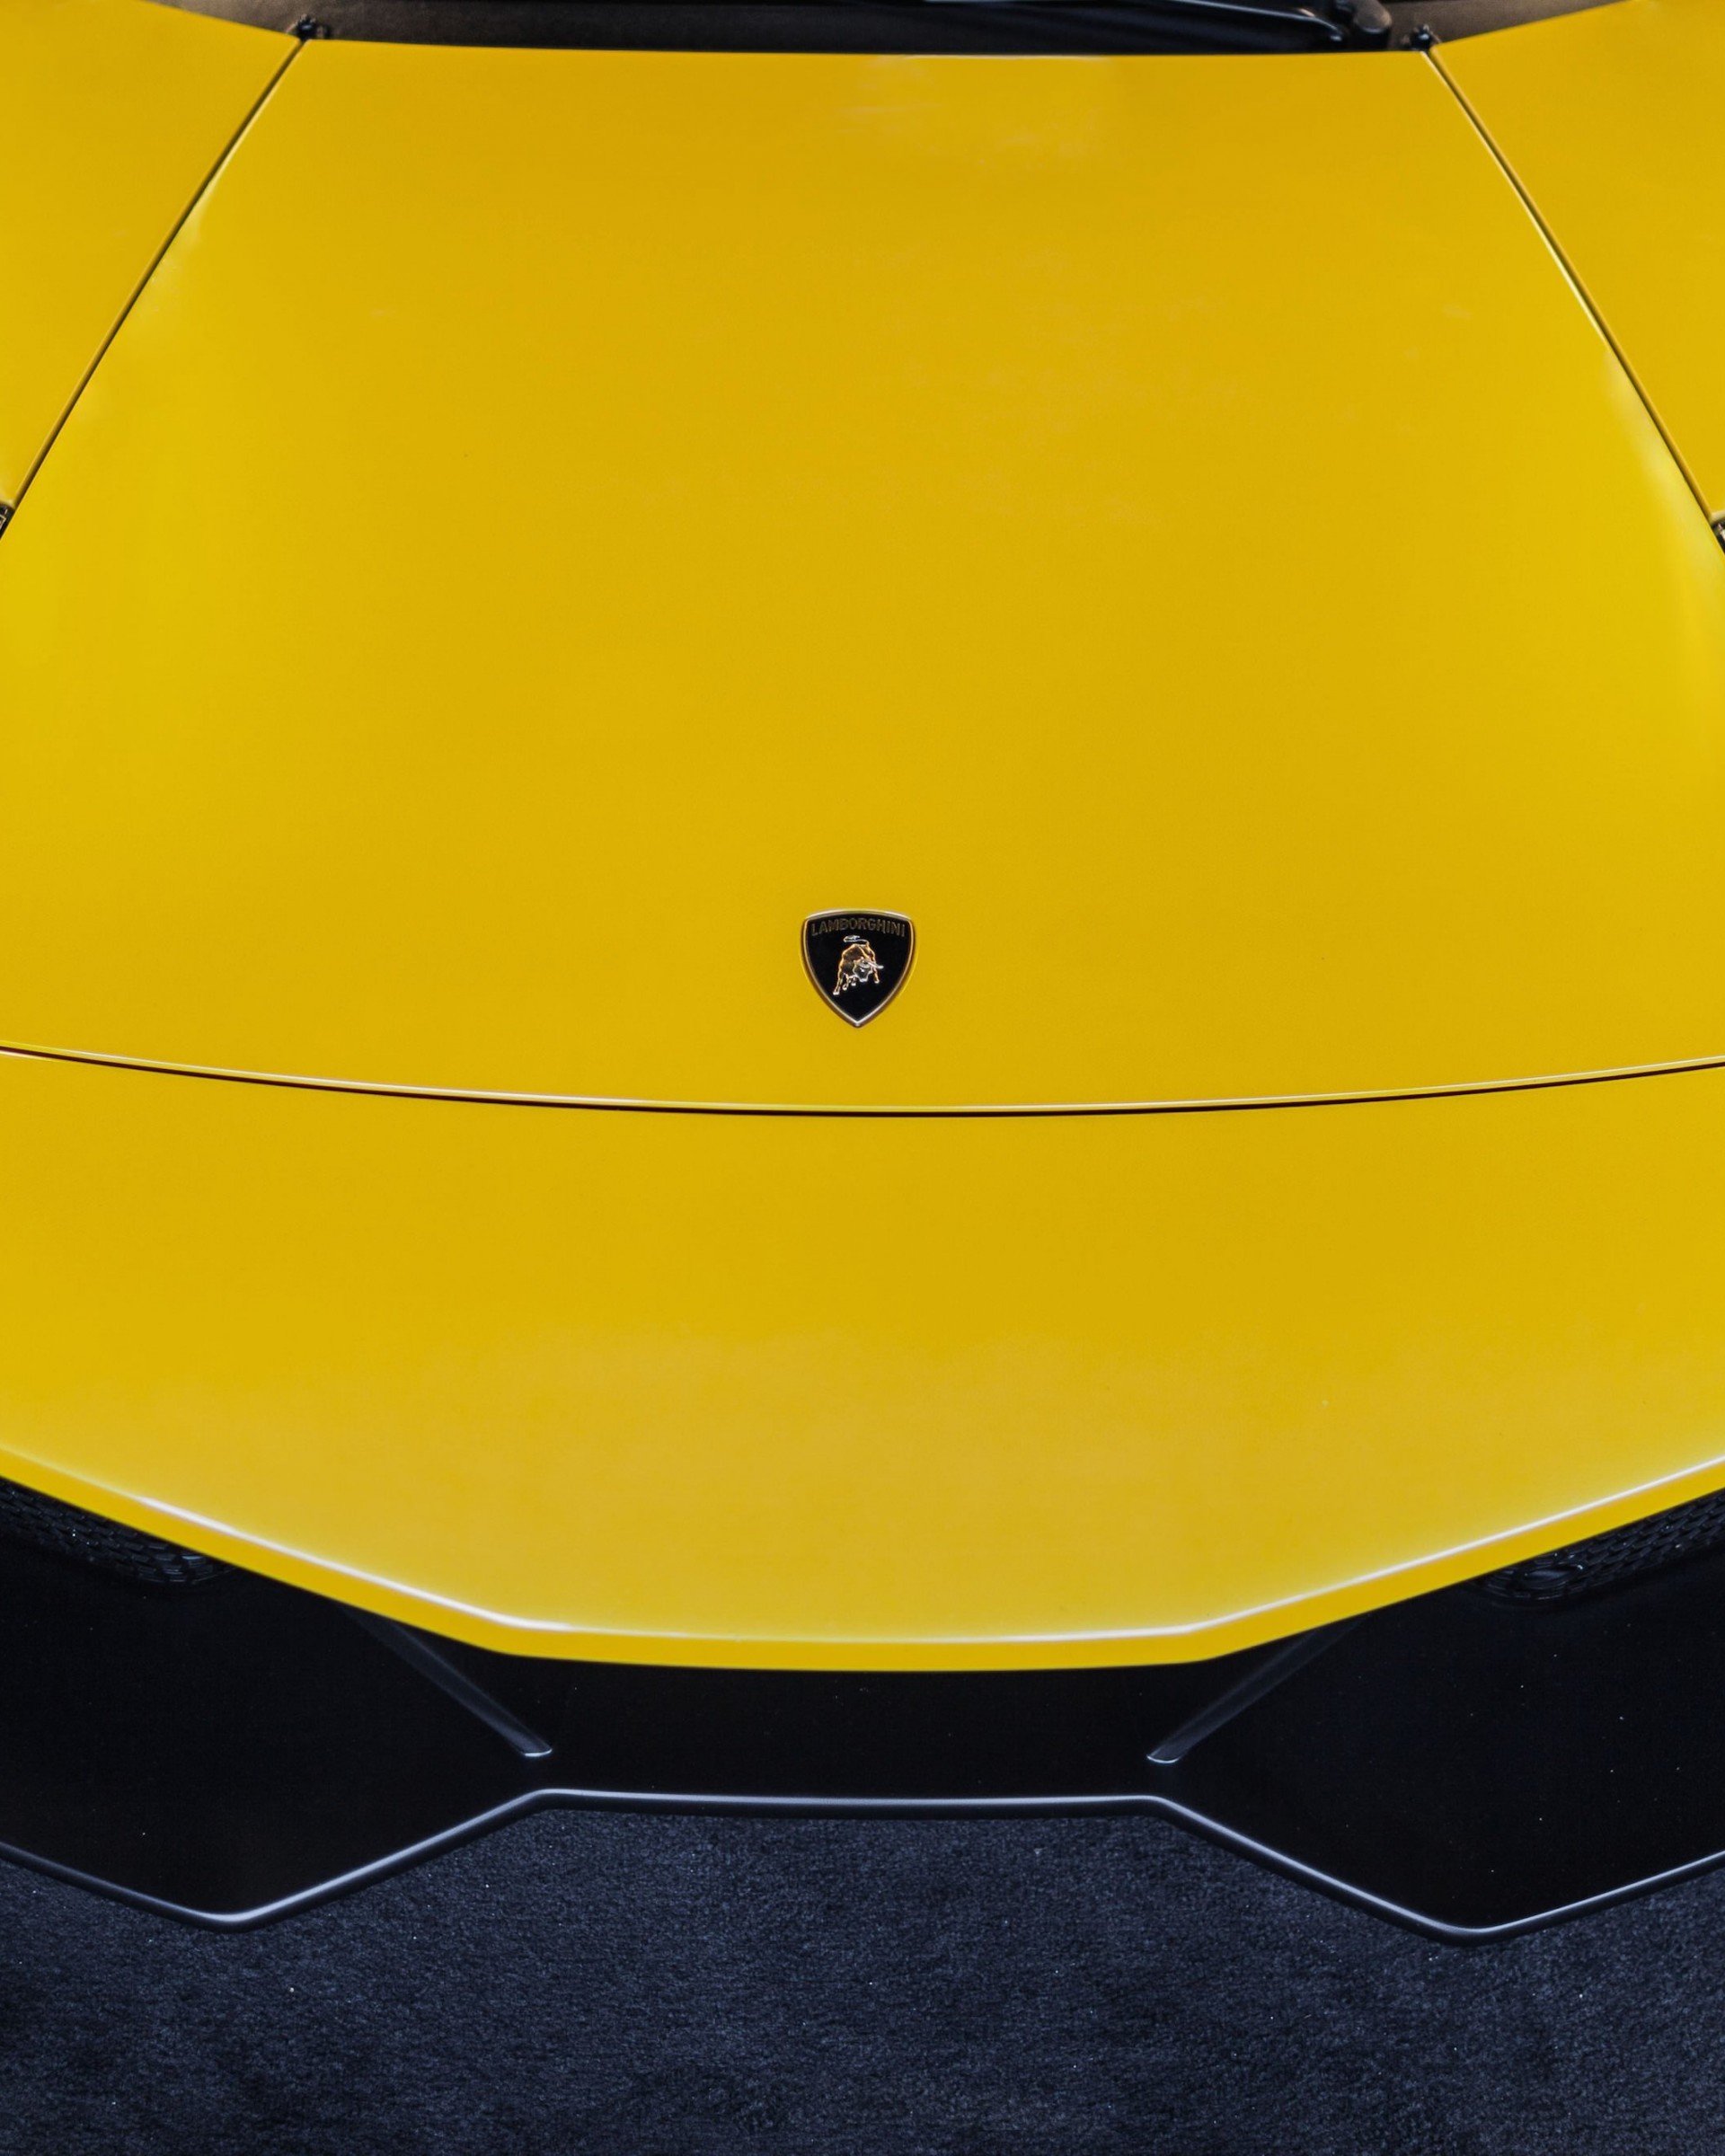 Lamborghini Murcielago LP670 Front Wallpaper for Google Nexus 7